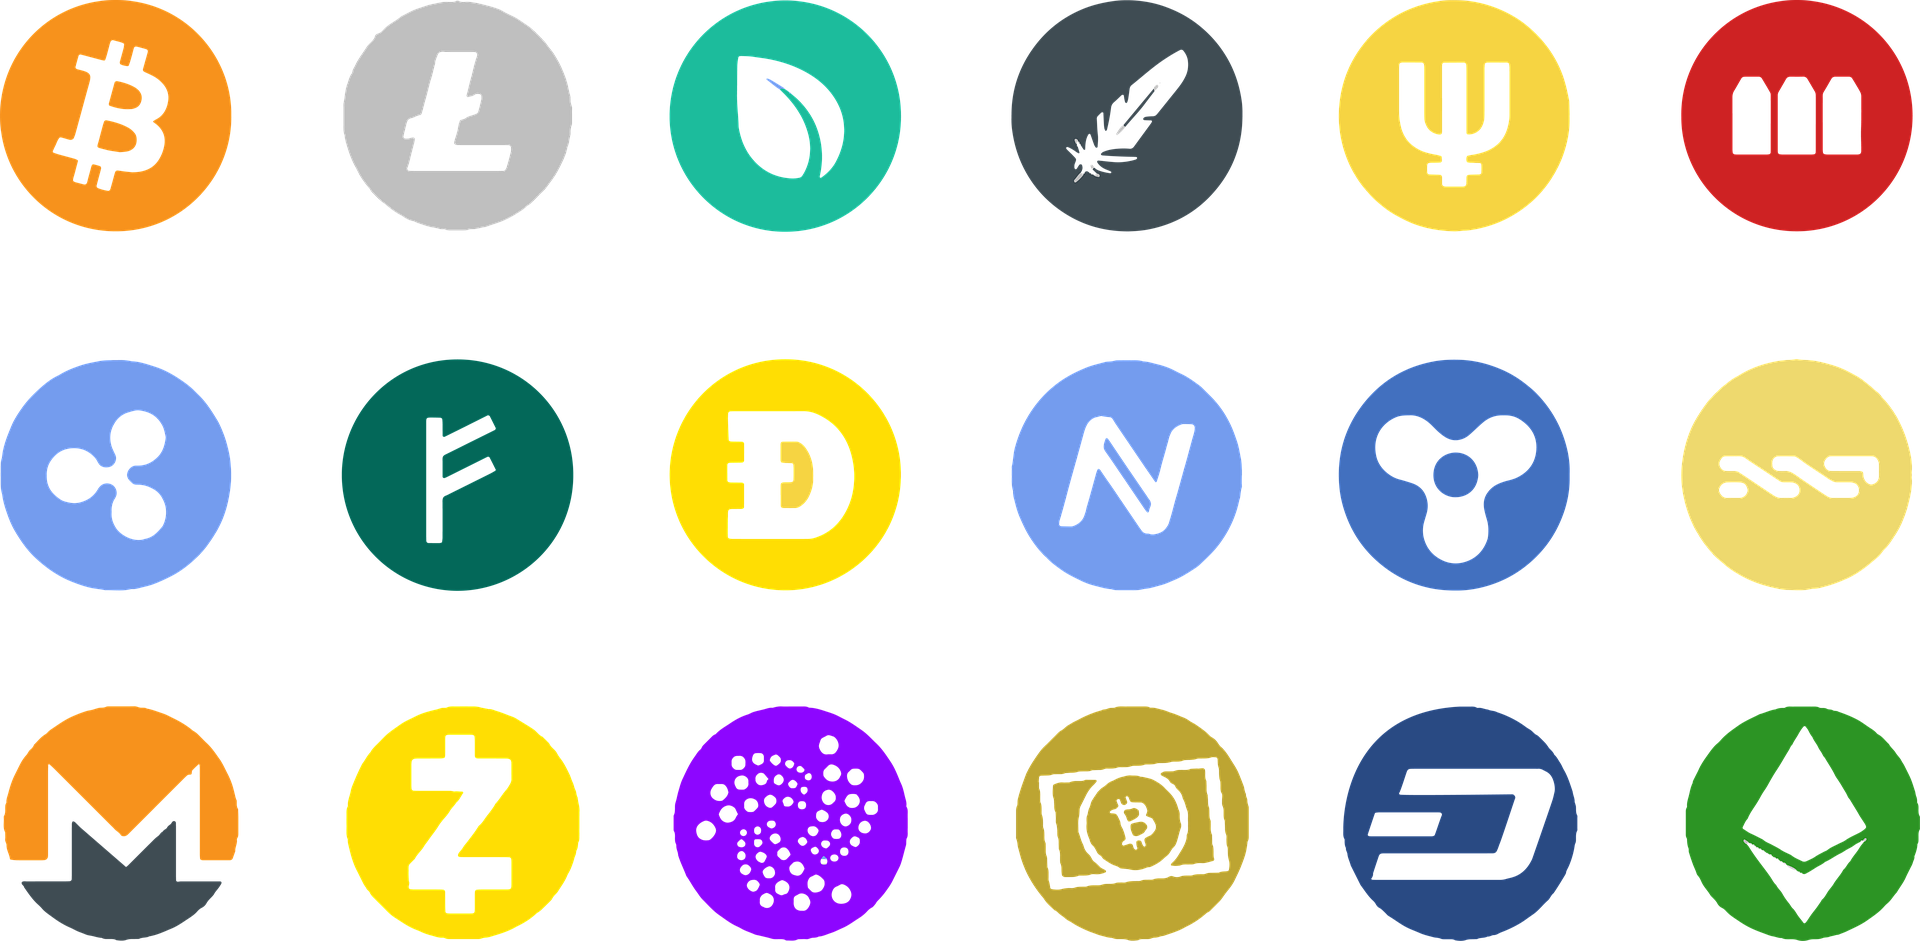 Stock image photo of altcoin logos